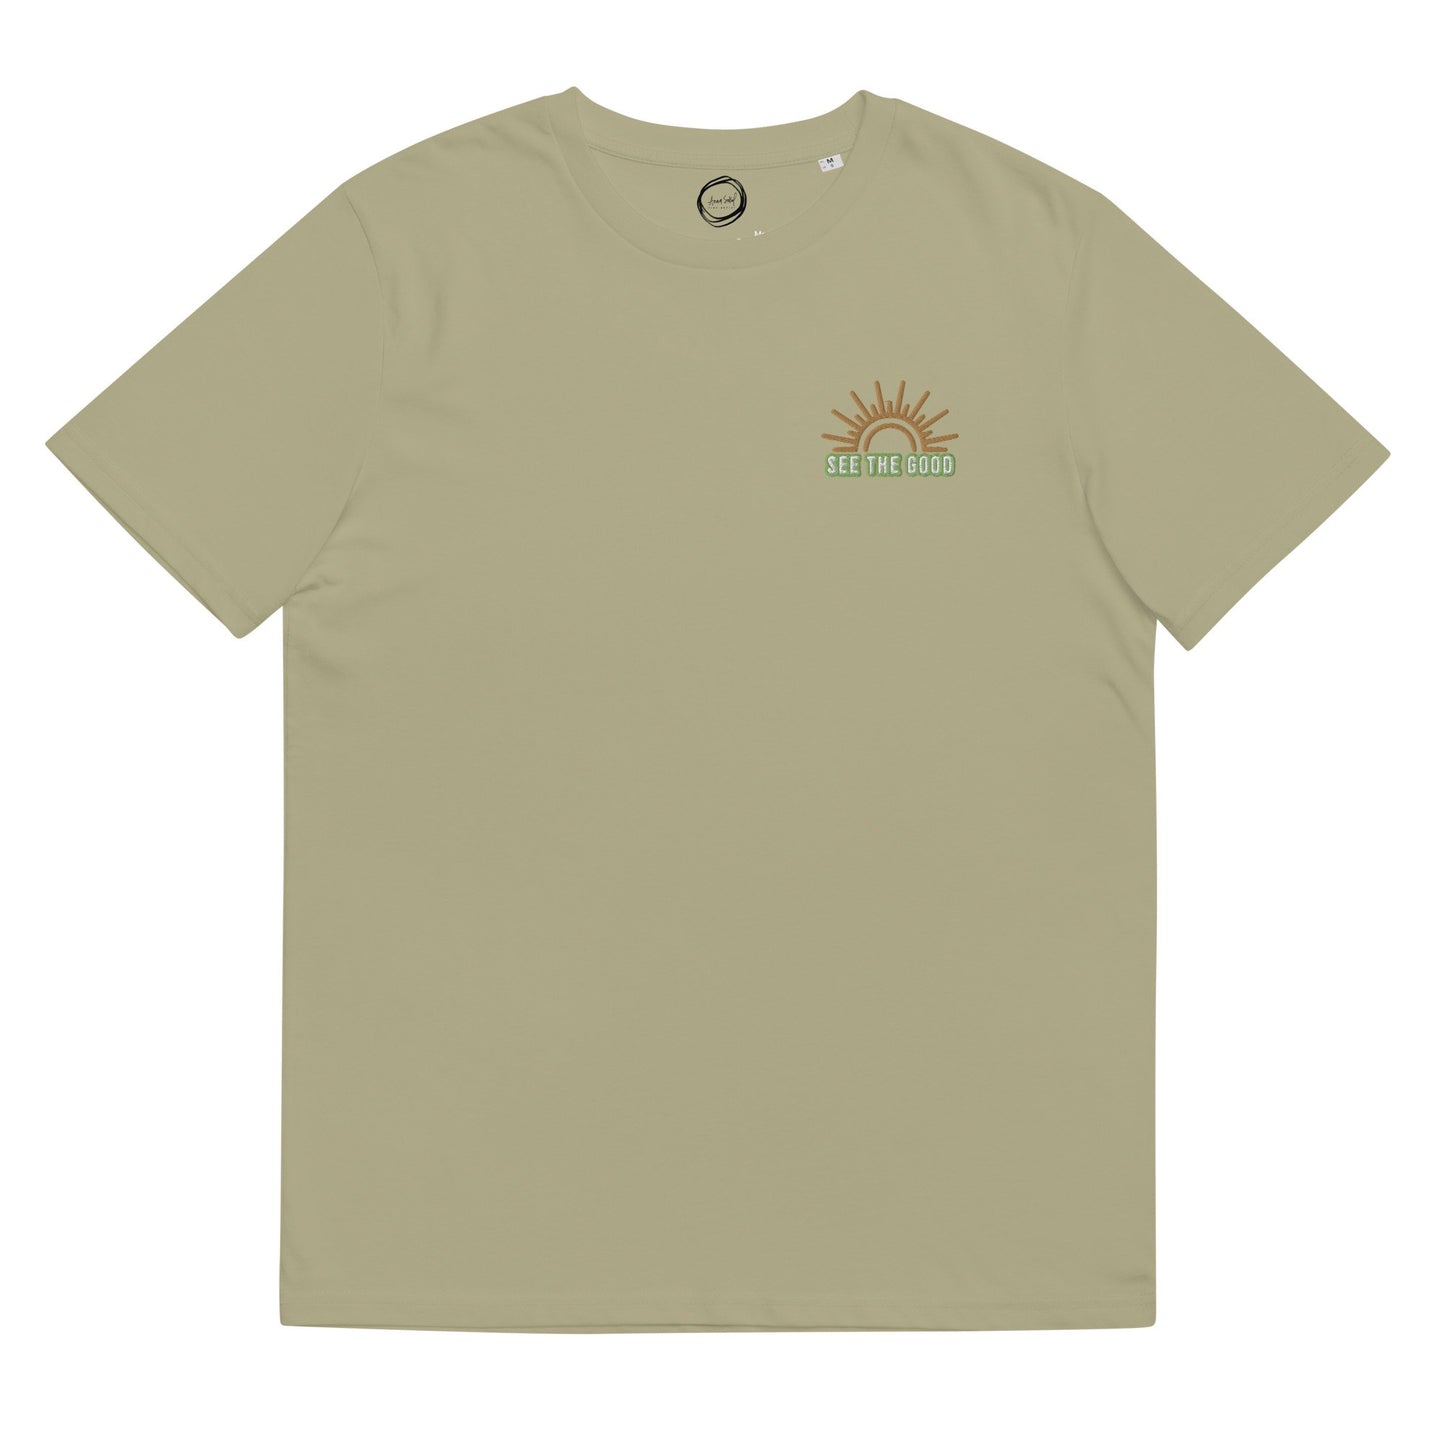 See the Good - Unisex organic cotton t-shirt